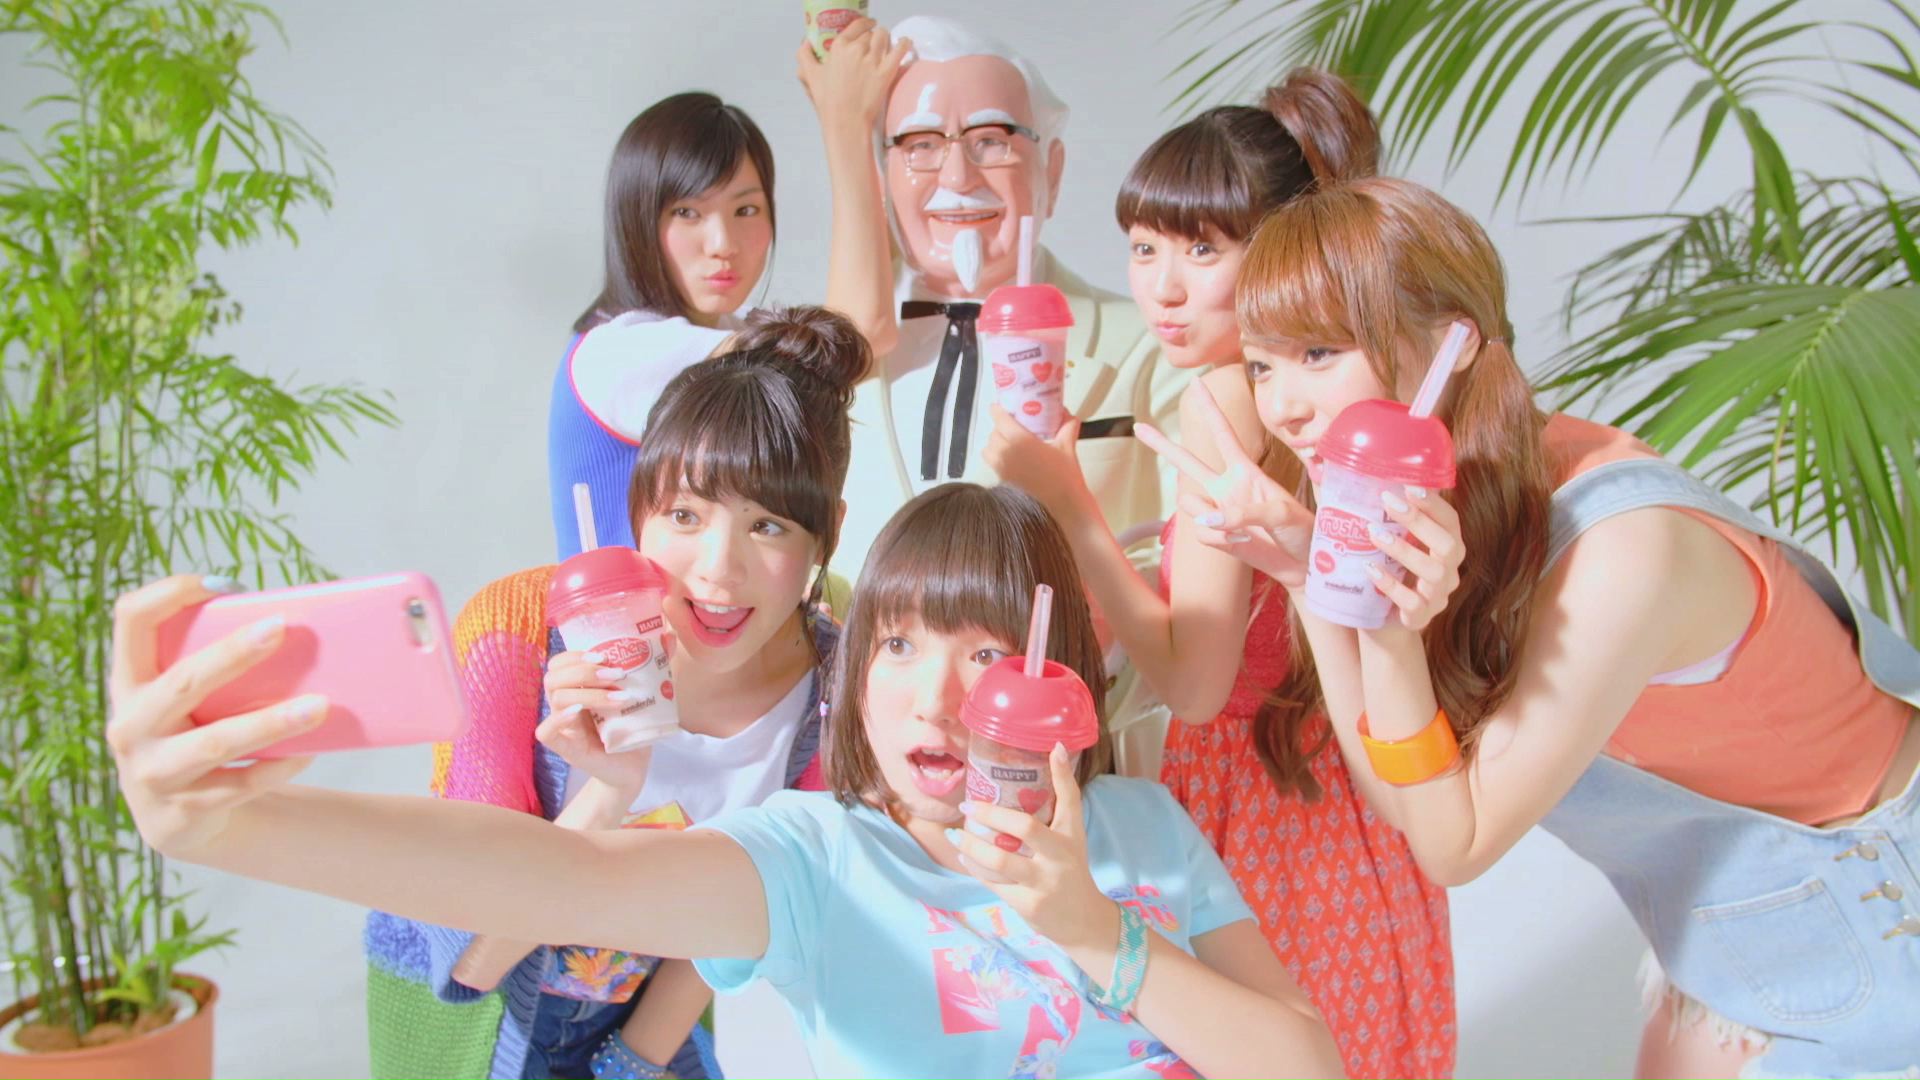 Yumemiru Adolescence and Colonel Sanders Make a Splash in the MV for “Kurachu Summer”!